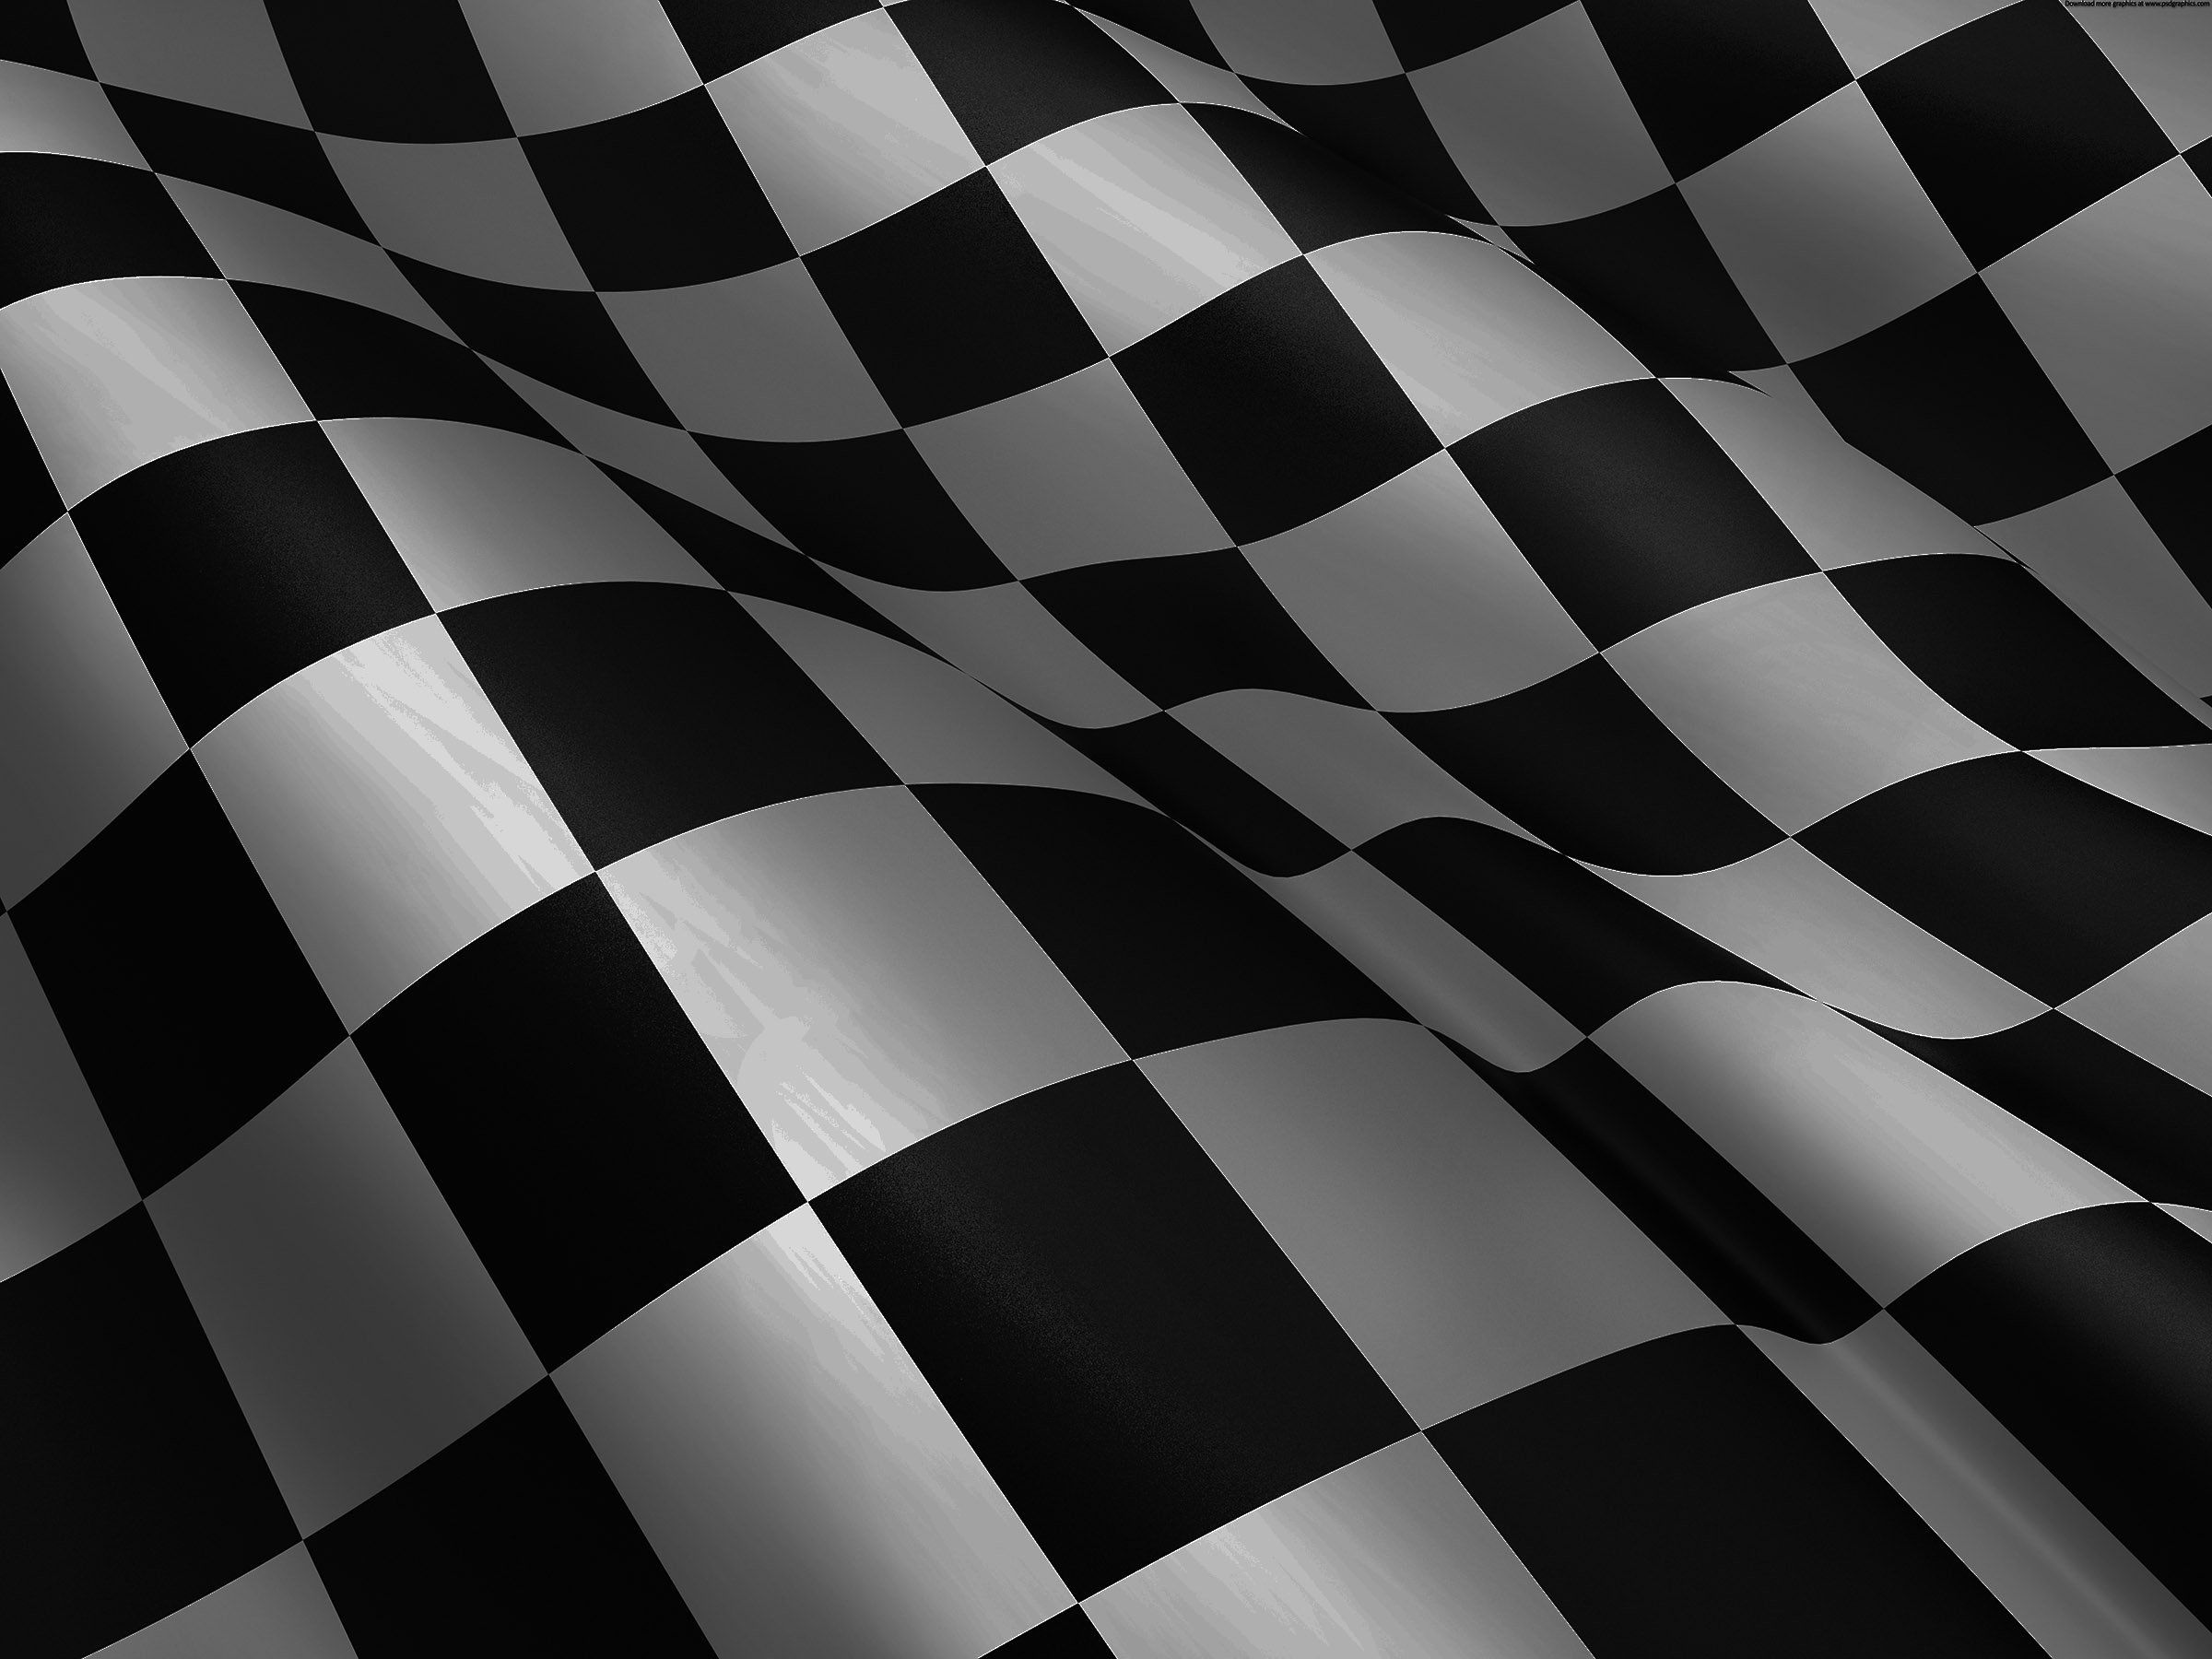 1800 Checkered Flag Background Illustrations RoyaltyFree Vector  Graphics  Clip Art  iStock  Checkered flag background vector